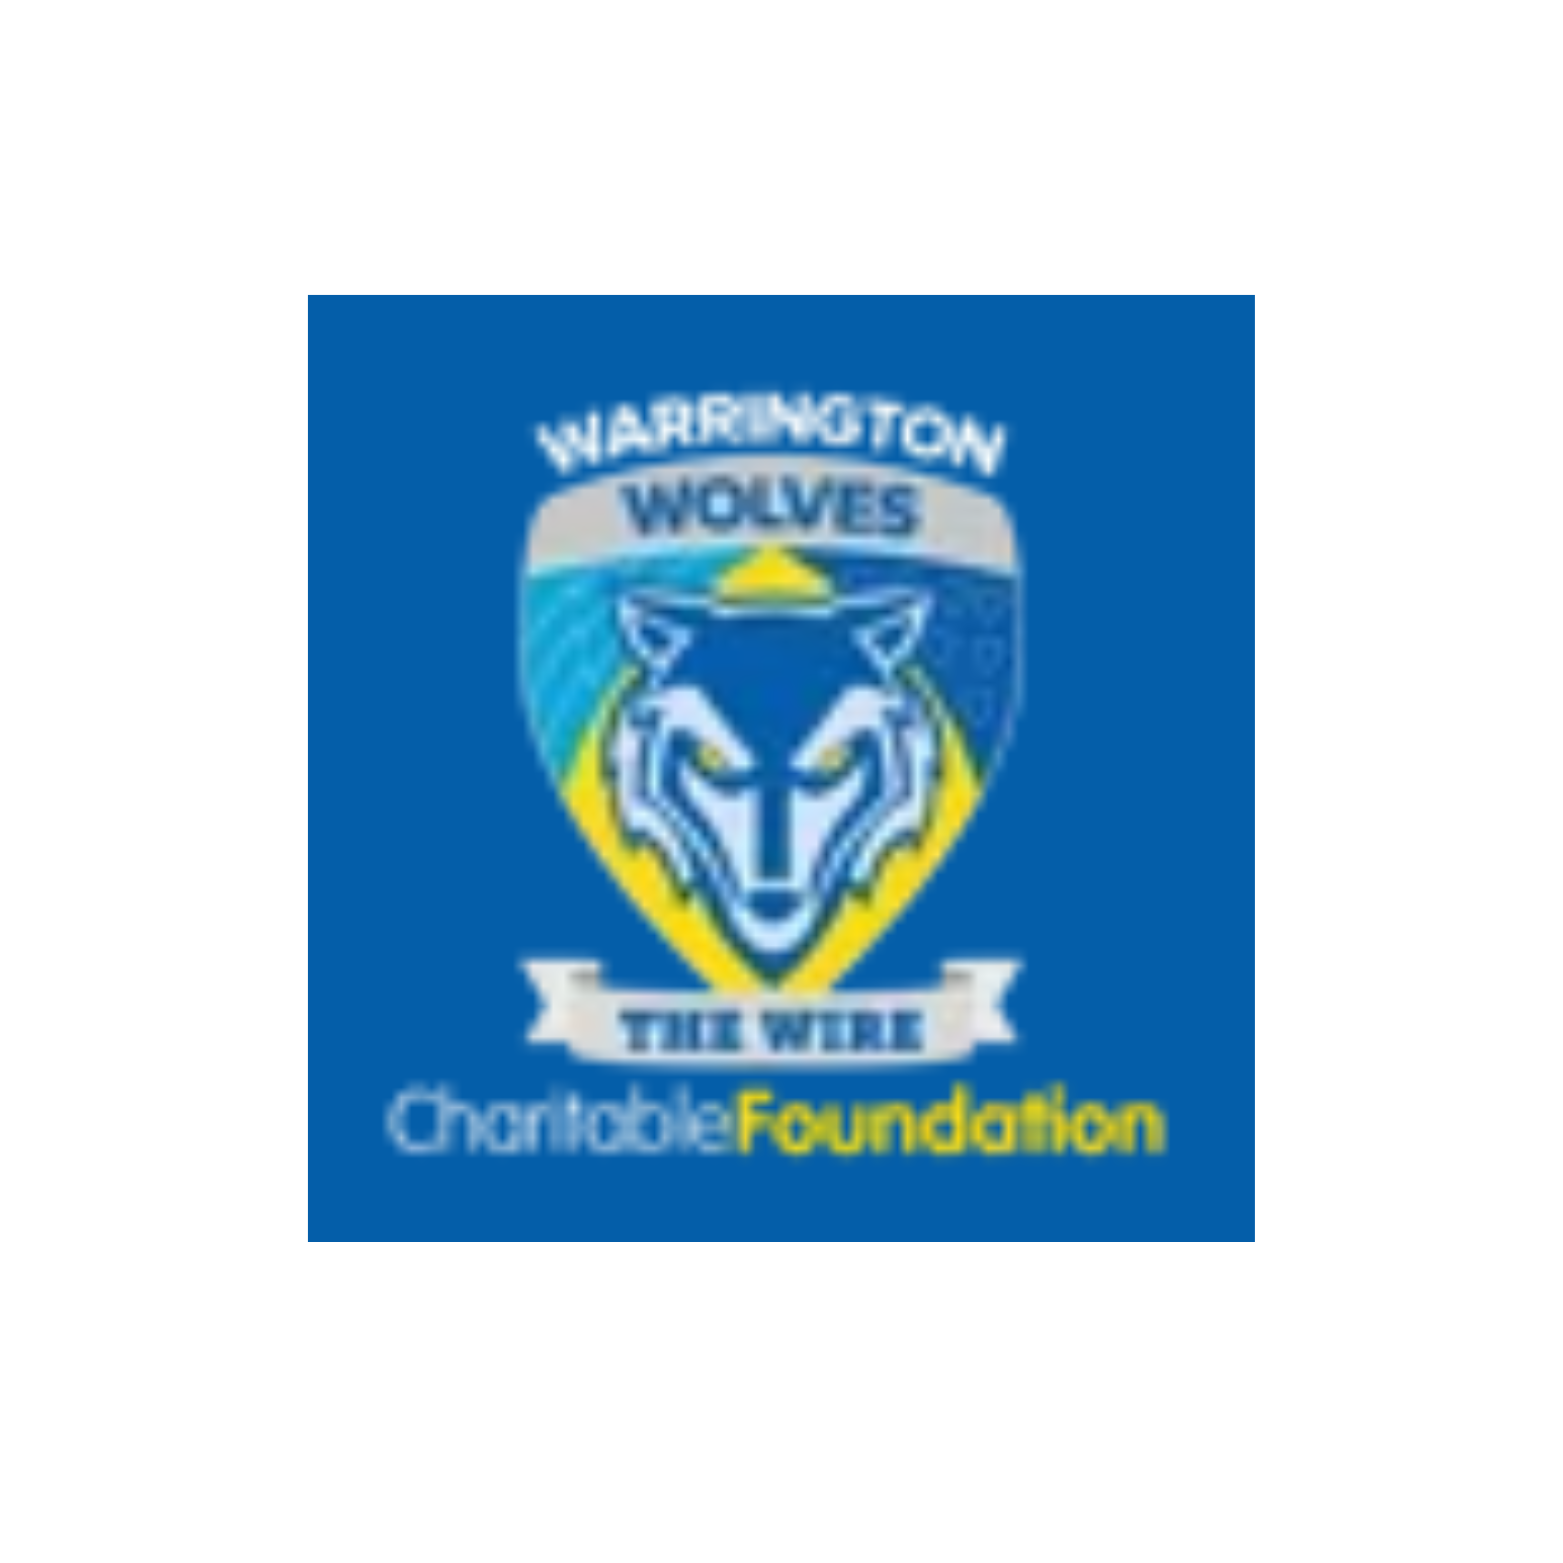 Warrington Wolves Charitable Foundation